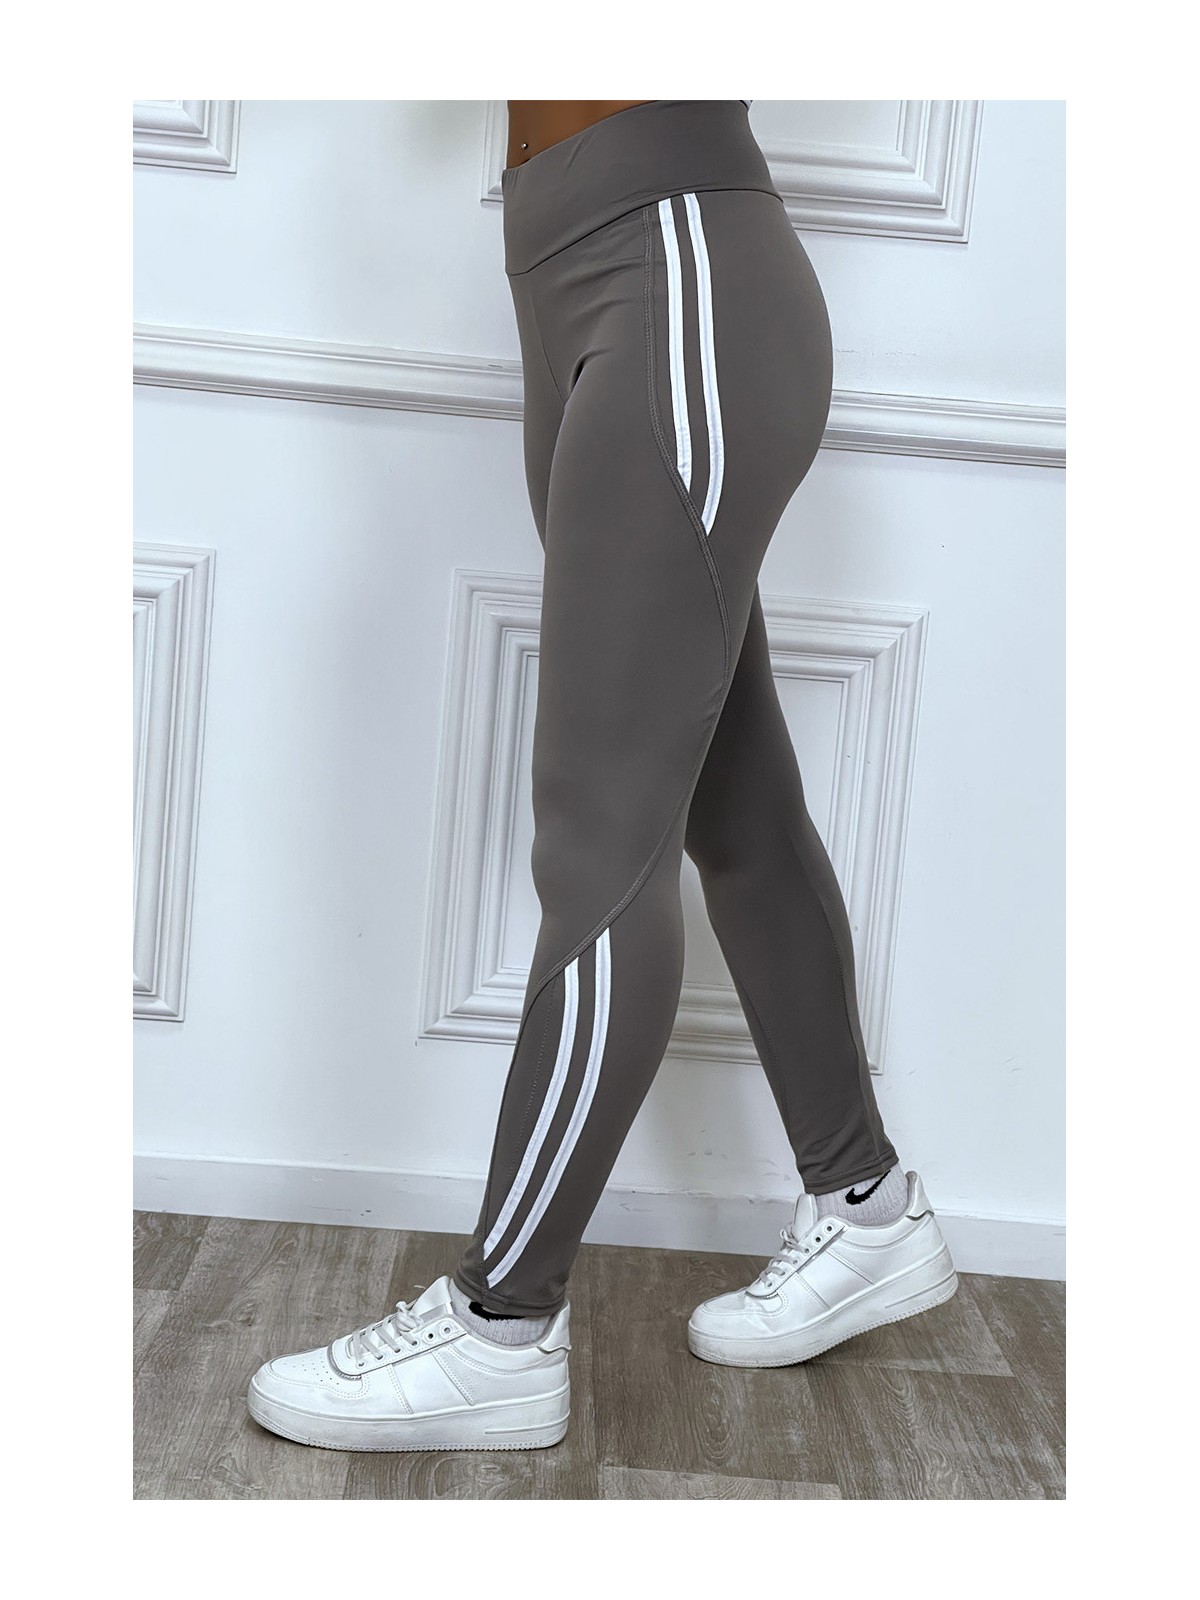 Legging fitness gris avec bandes blanches - 2